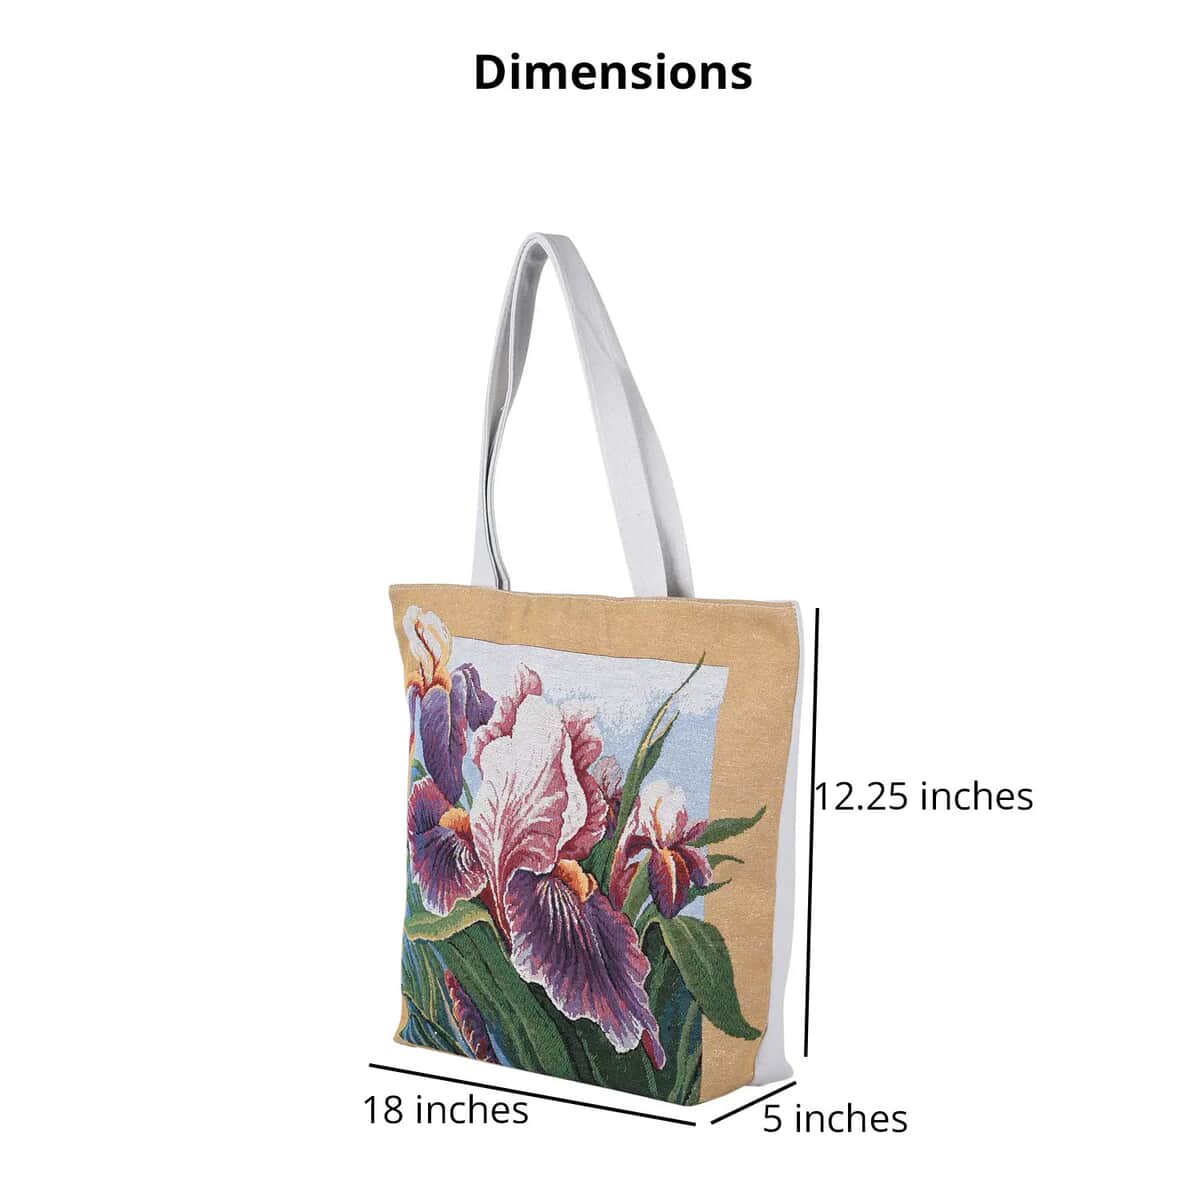 Khaki Flower Jacquard Pattern Tote Bag (18"x5"x12.25") image number 5